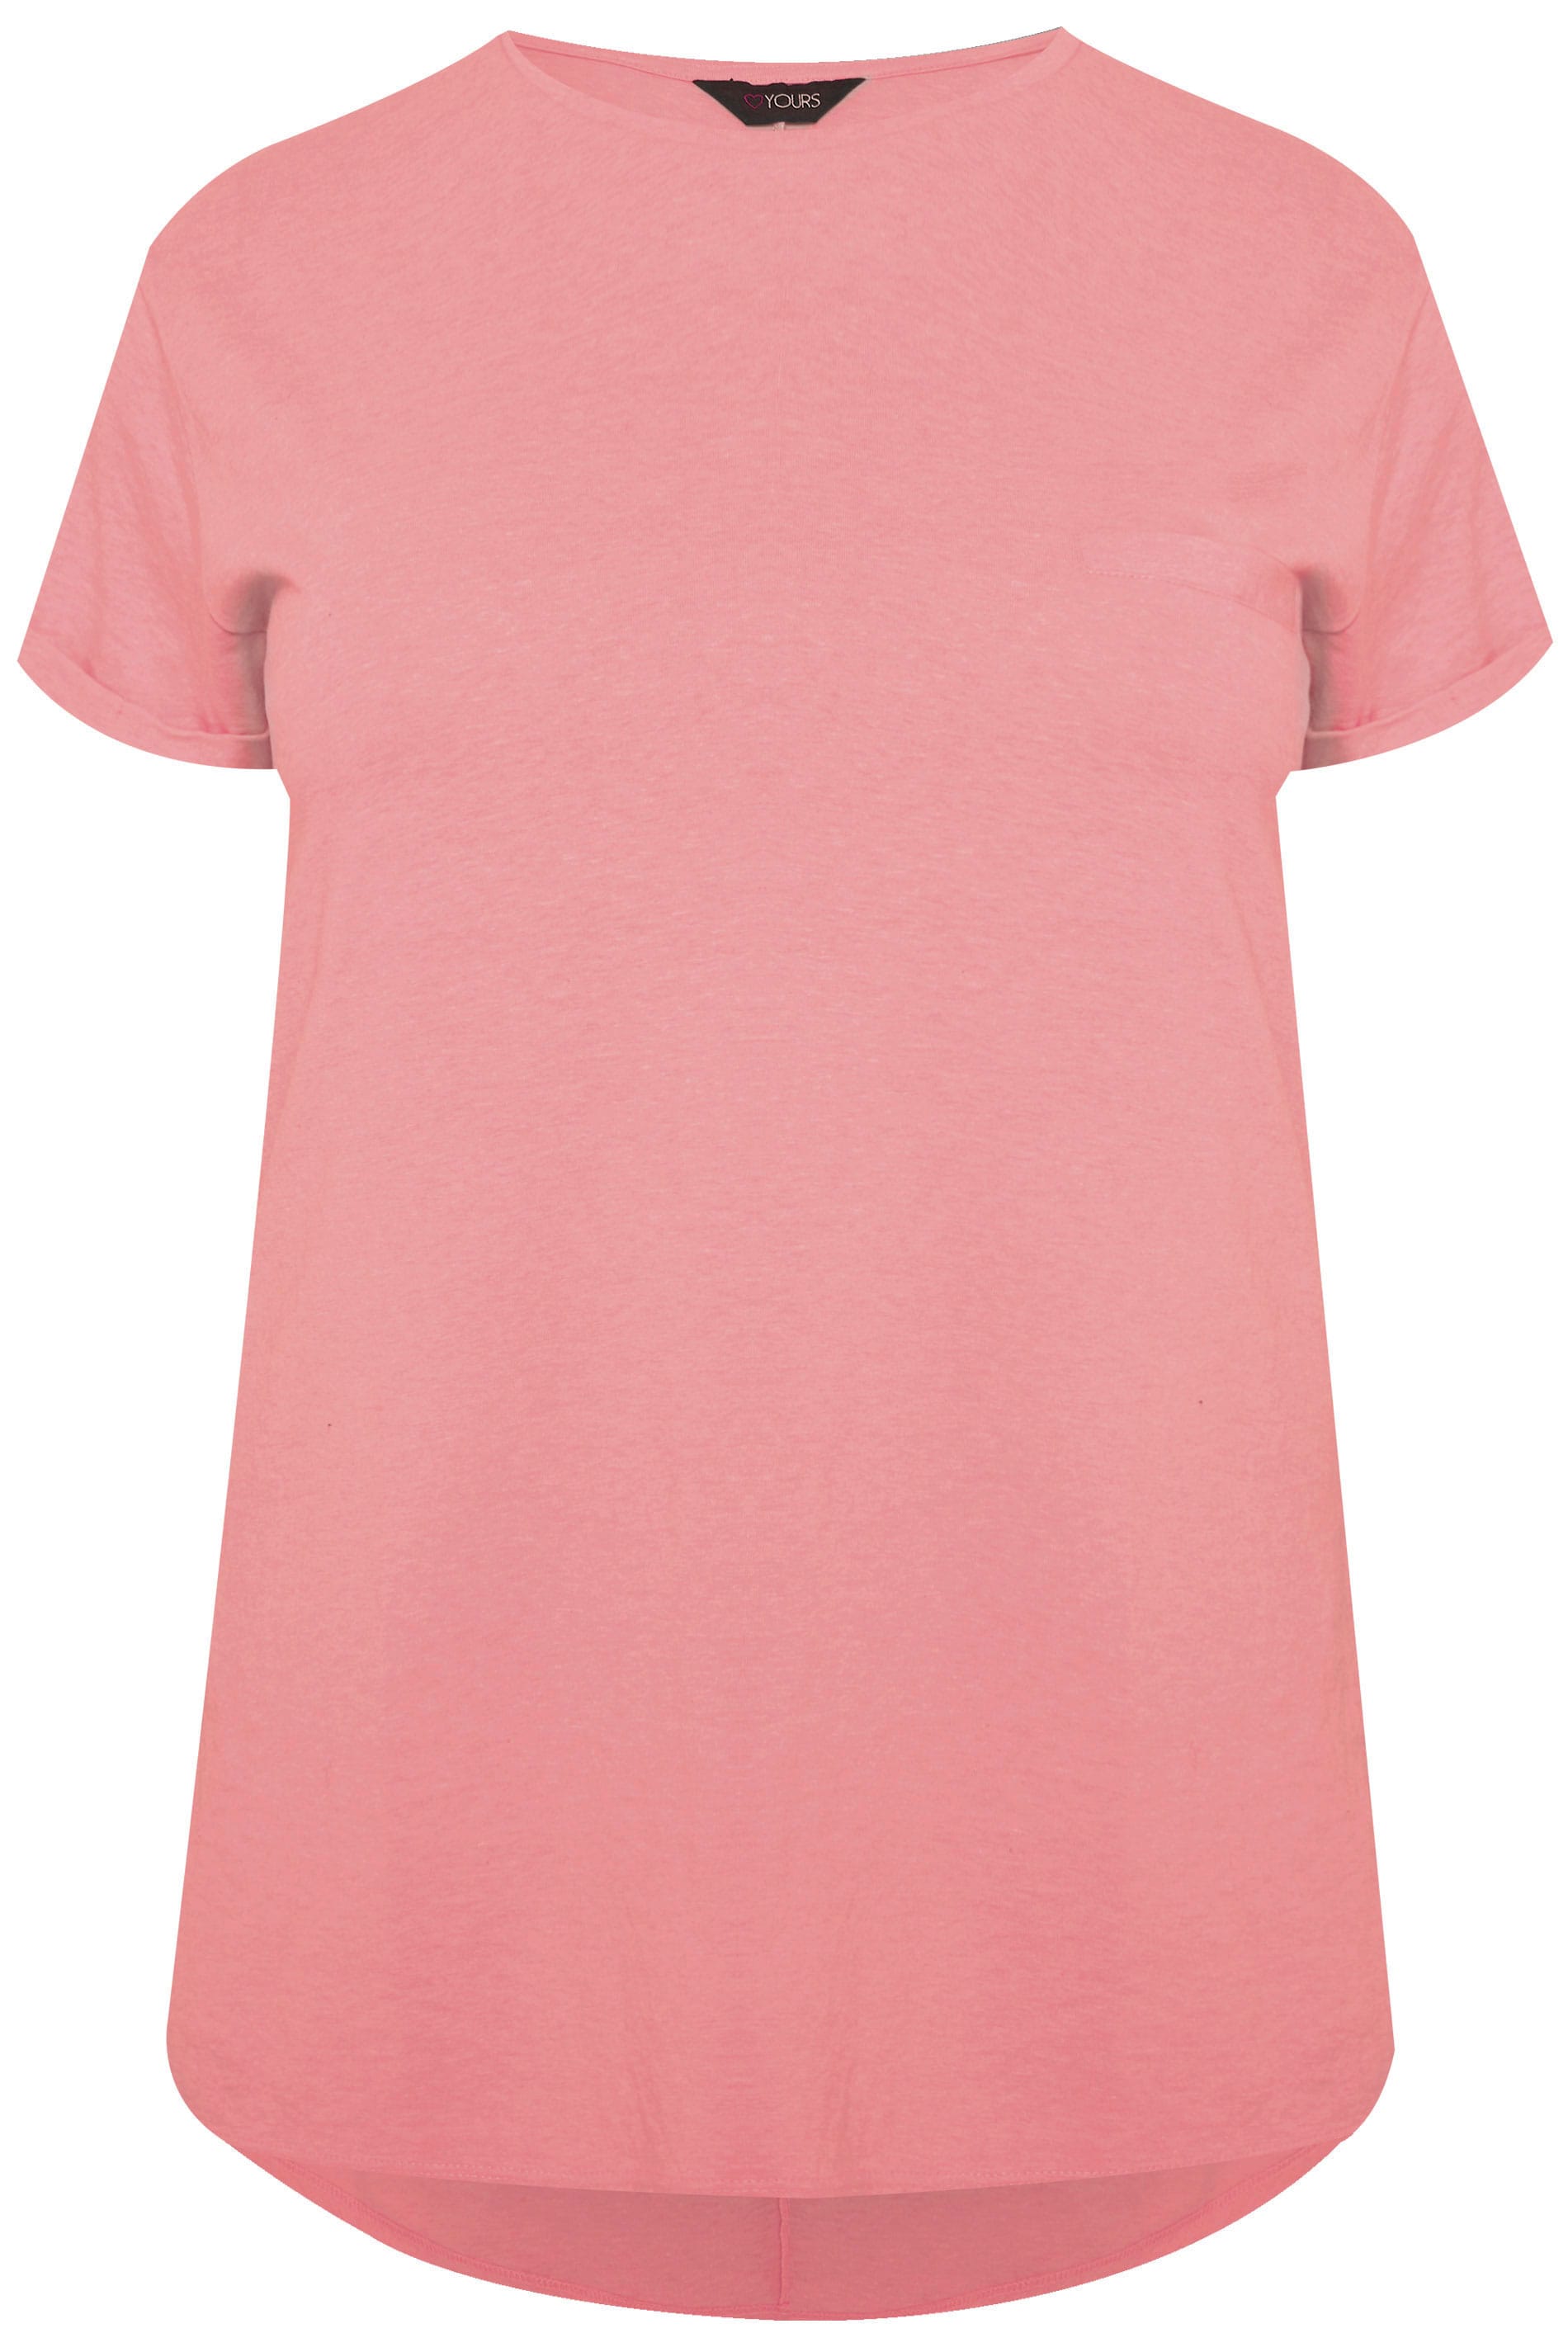 Download Pink Mock Pocket T-Shirt, plus size 16 to 36